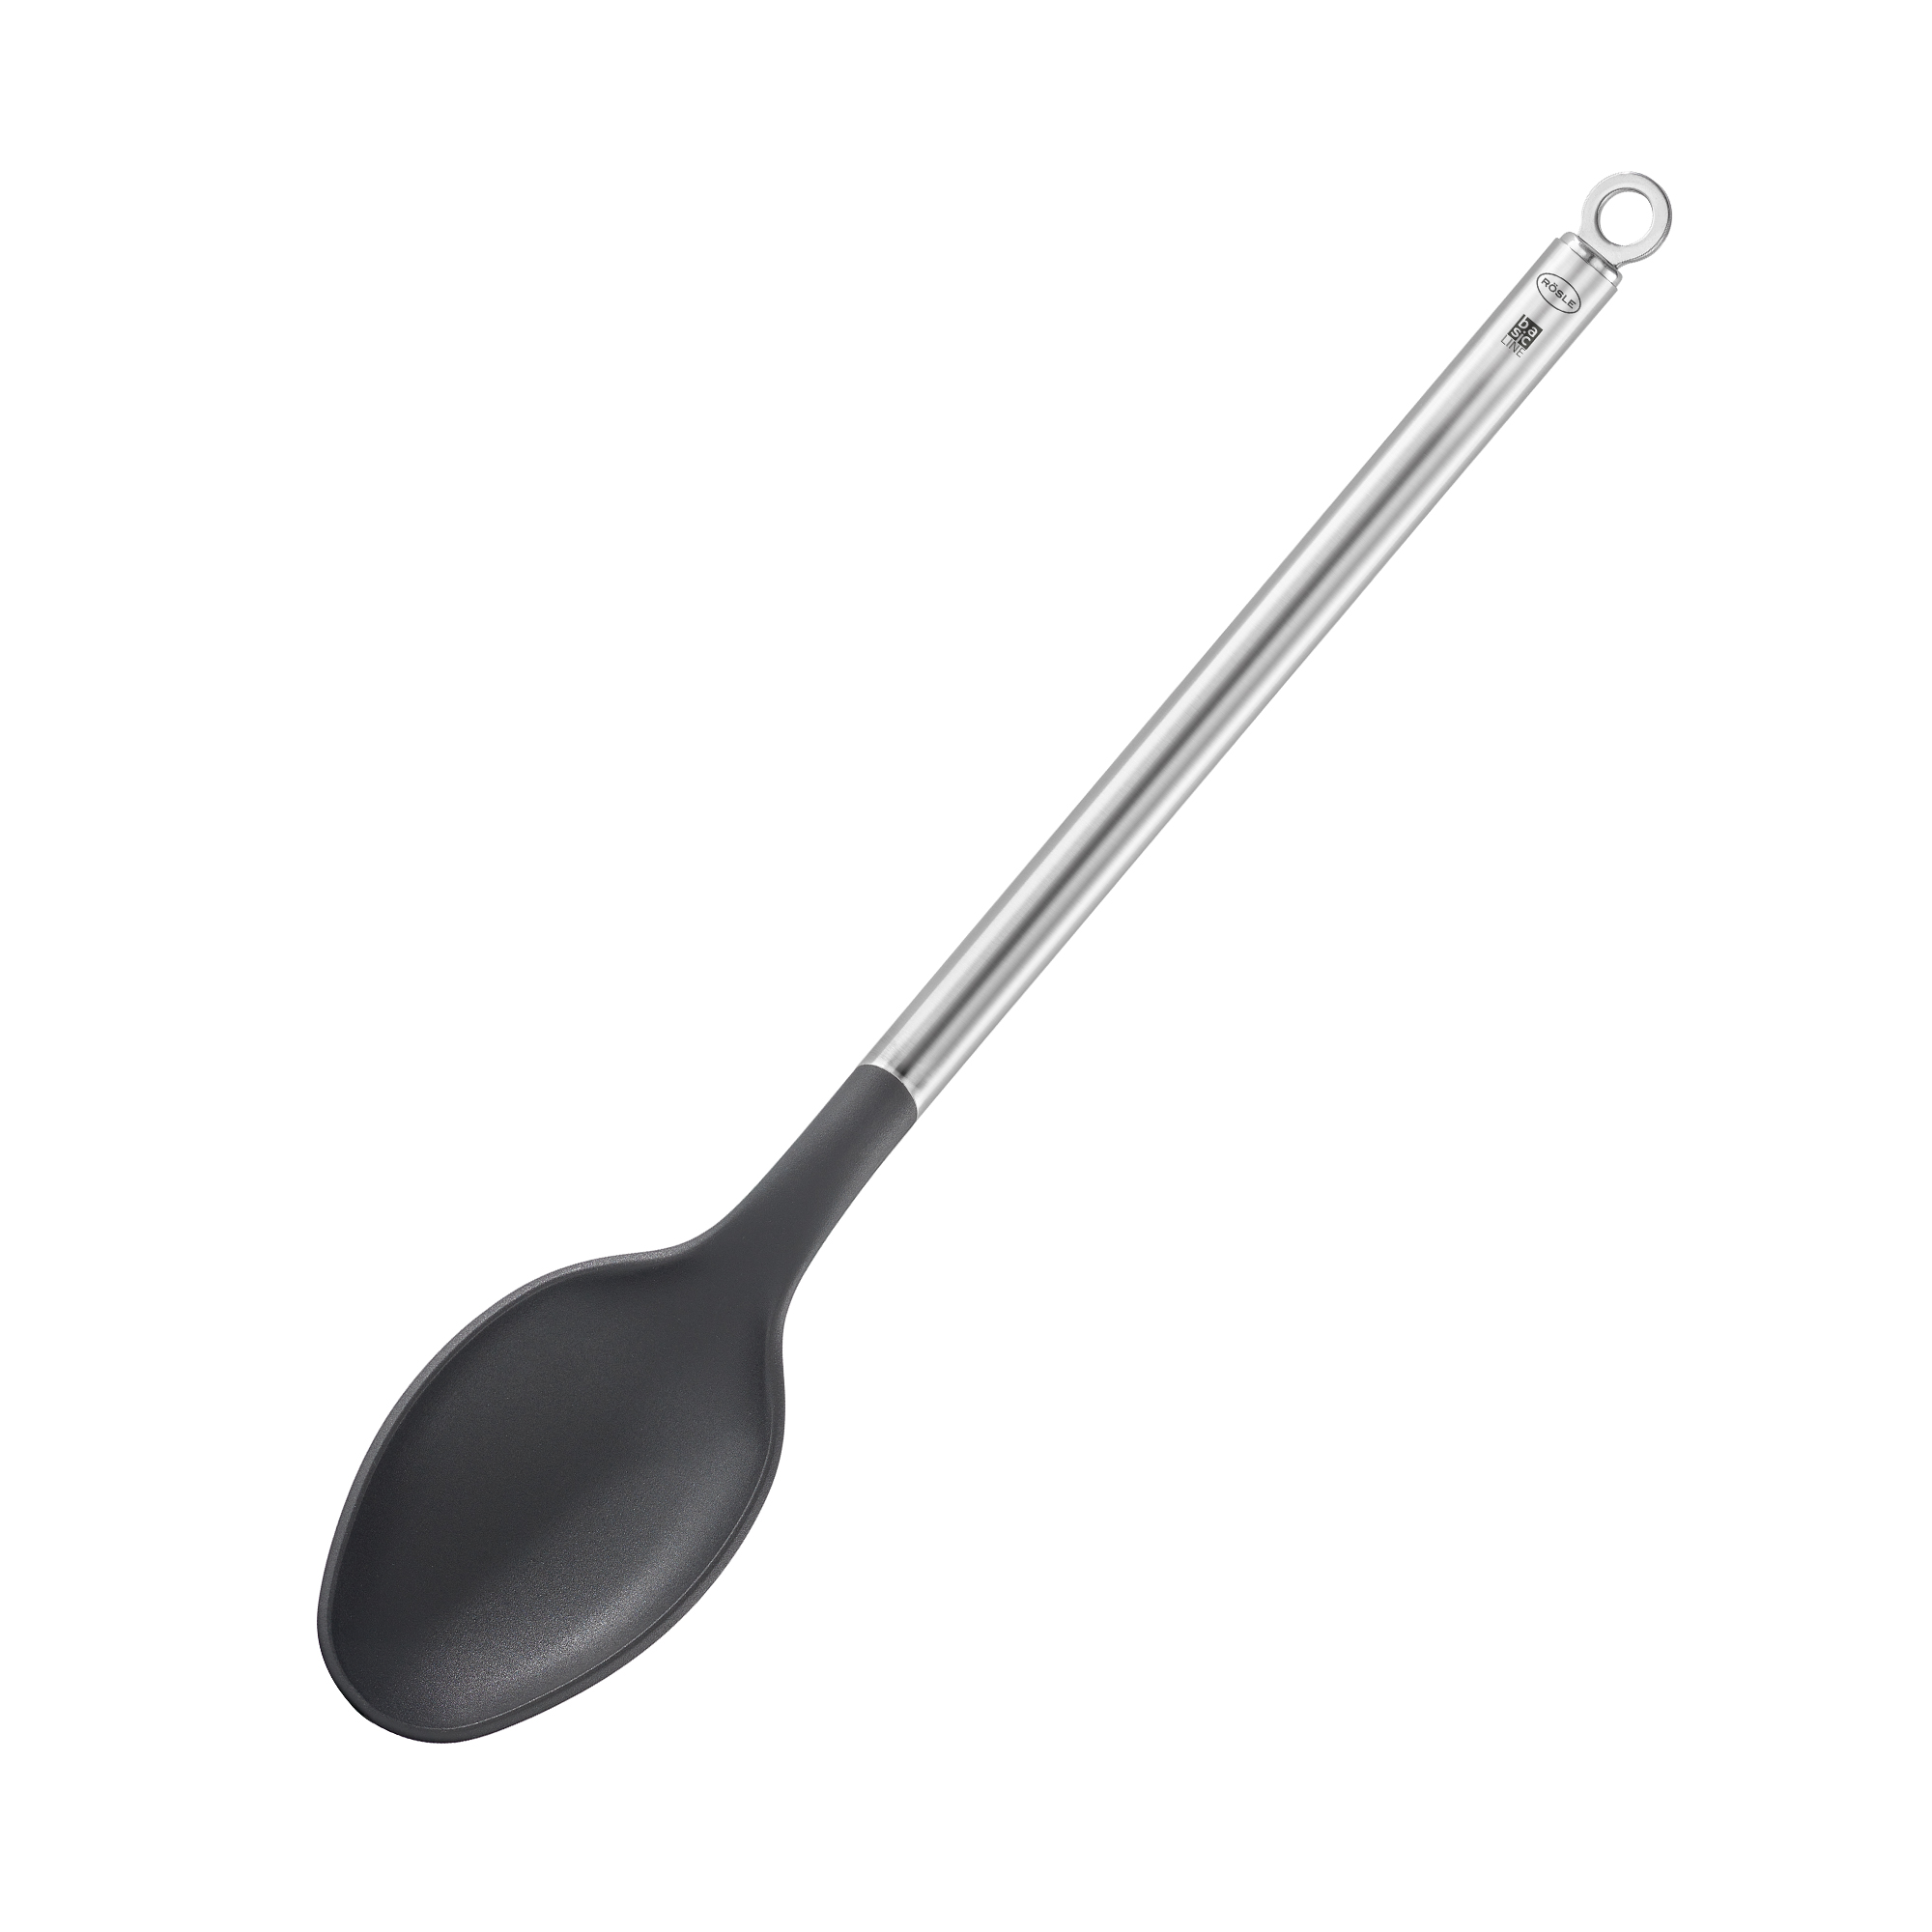 Portion spoon "Basic Line" 32 cm I 12.5 in.